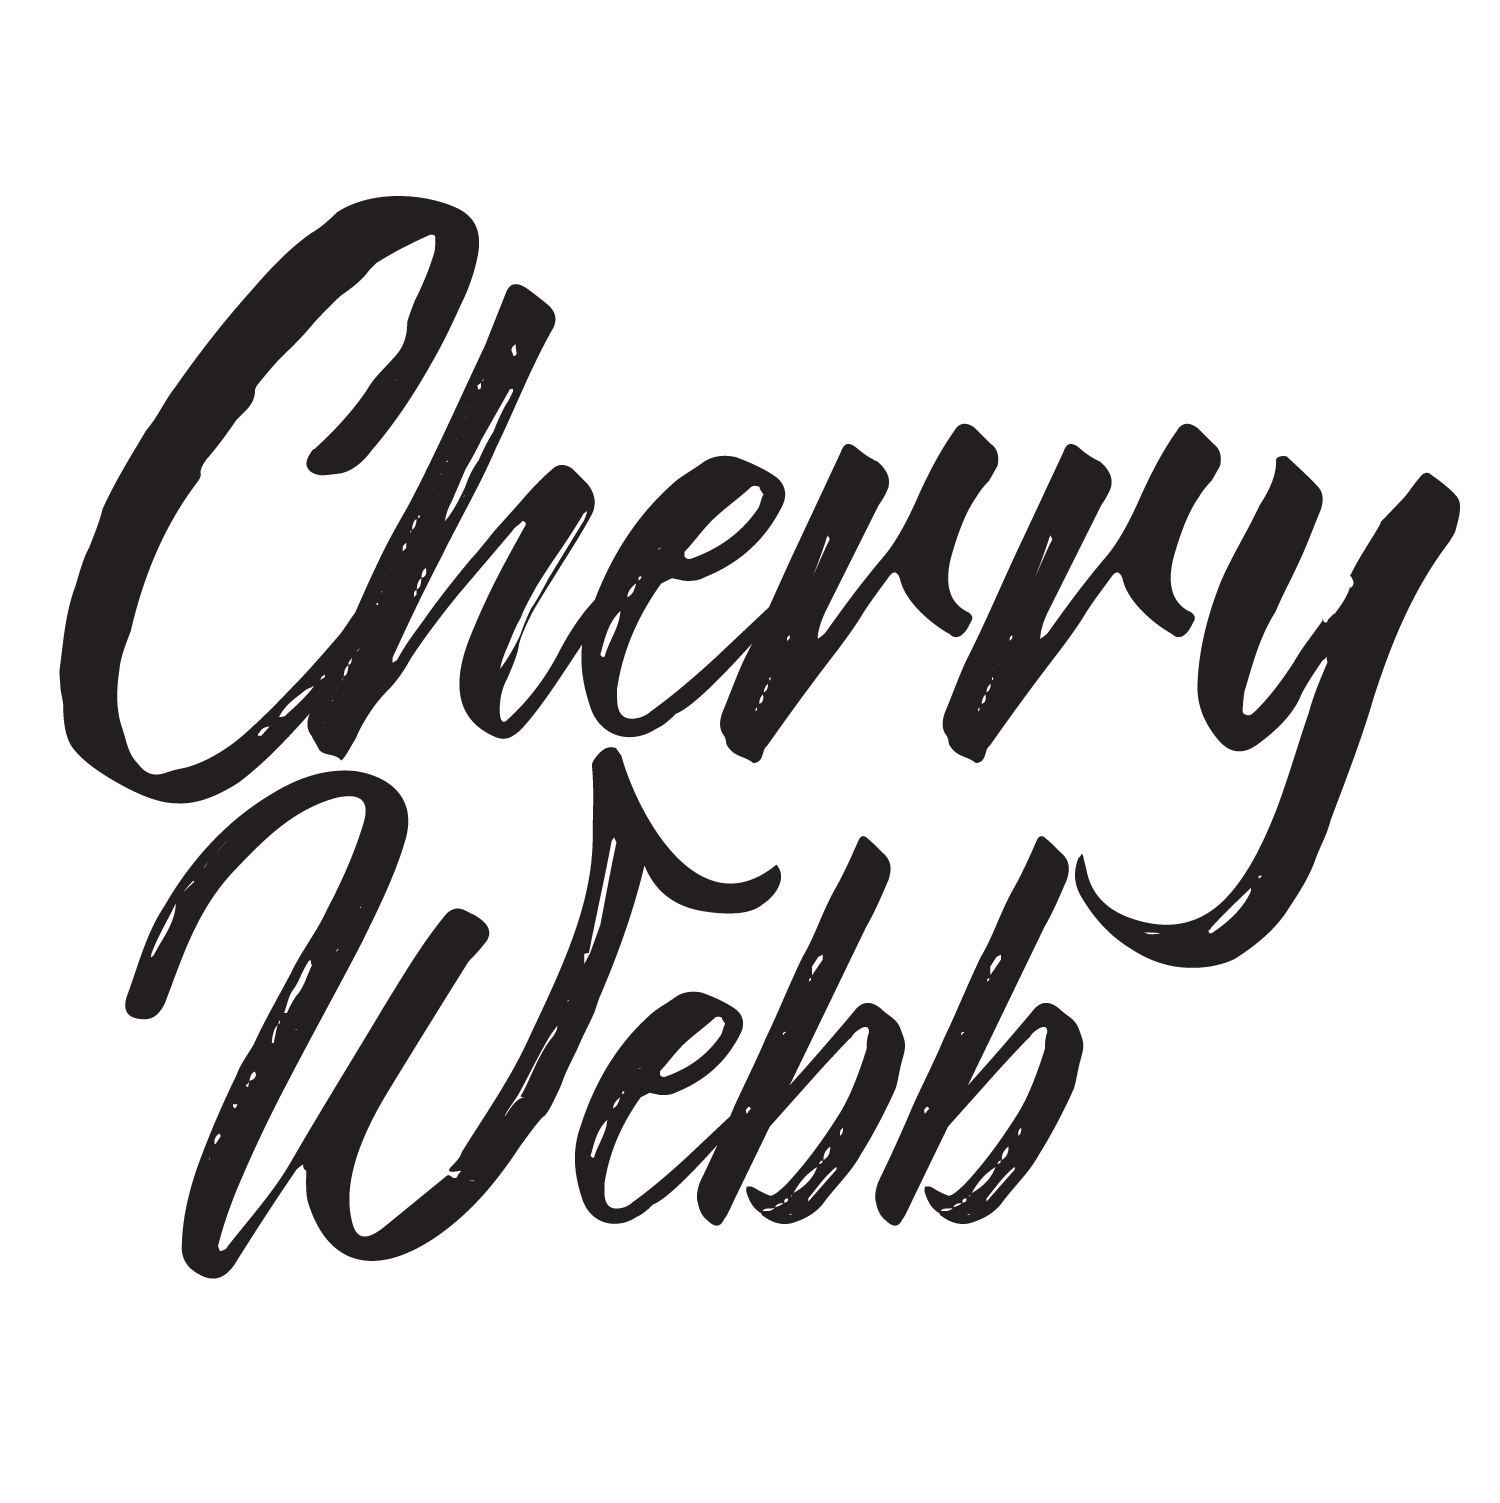 Cherry Webb